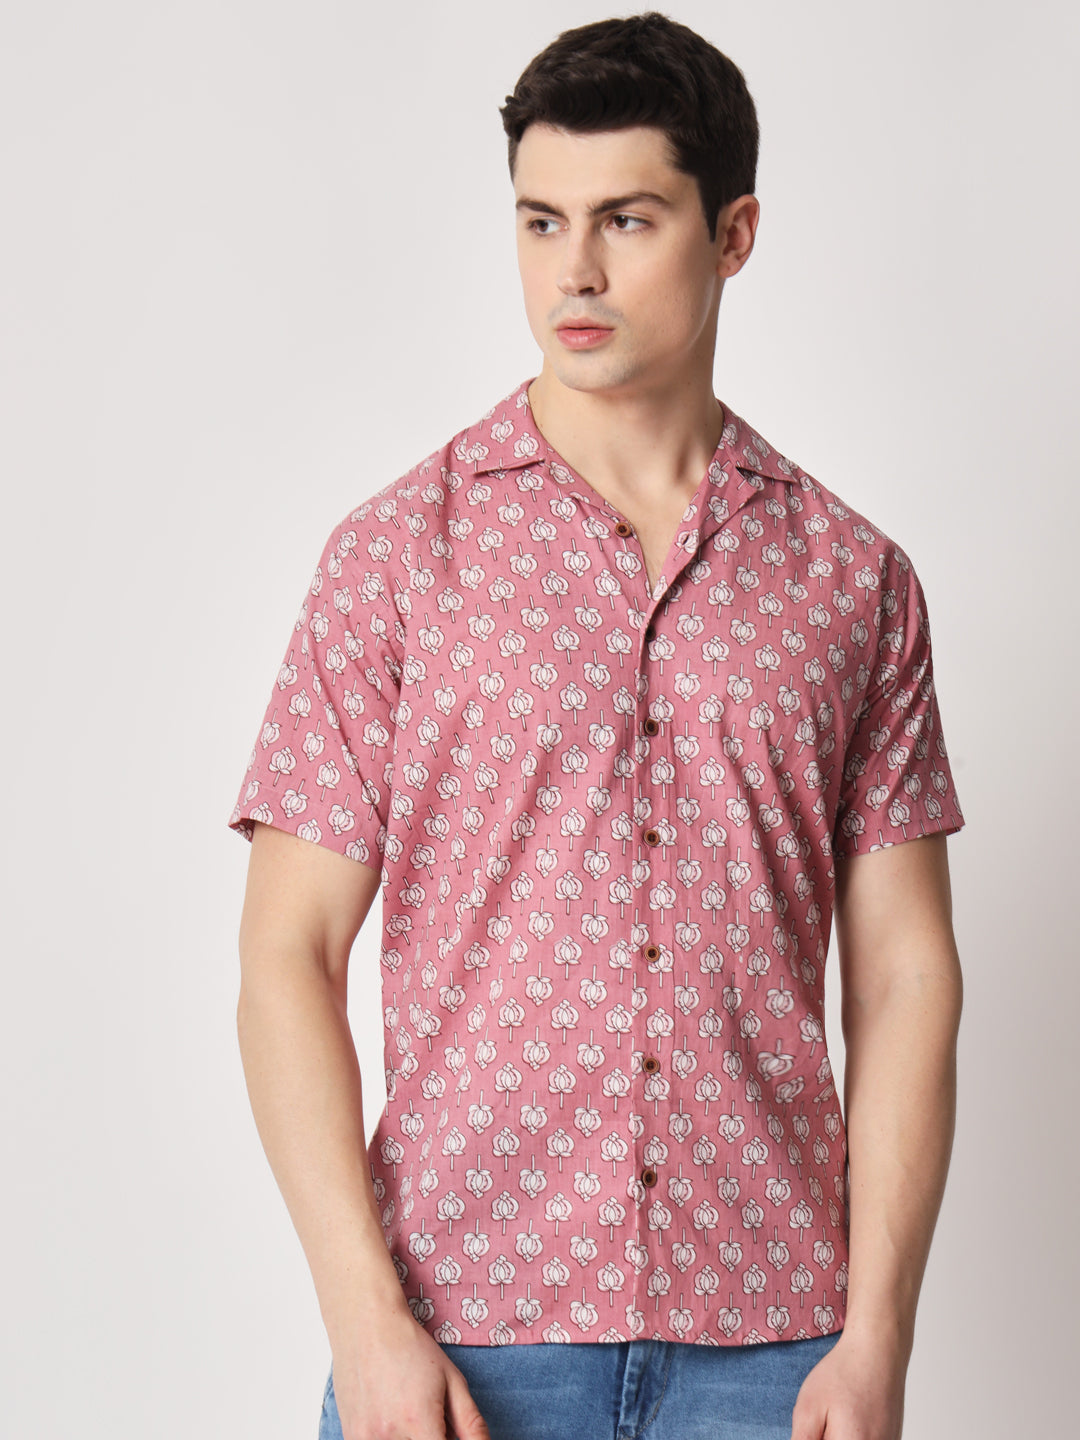 Firangi Yarn 100% Jaipuri Cotton Lotus Printed Beach Cuban Collar Casual Shirt Pink